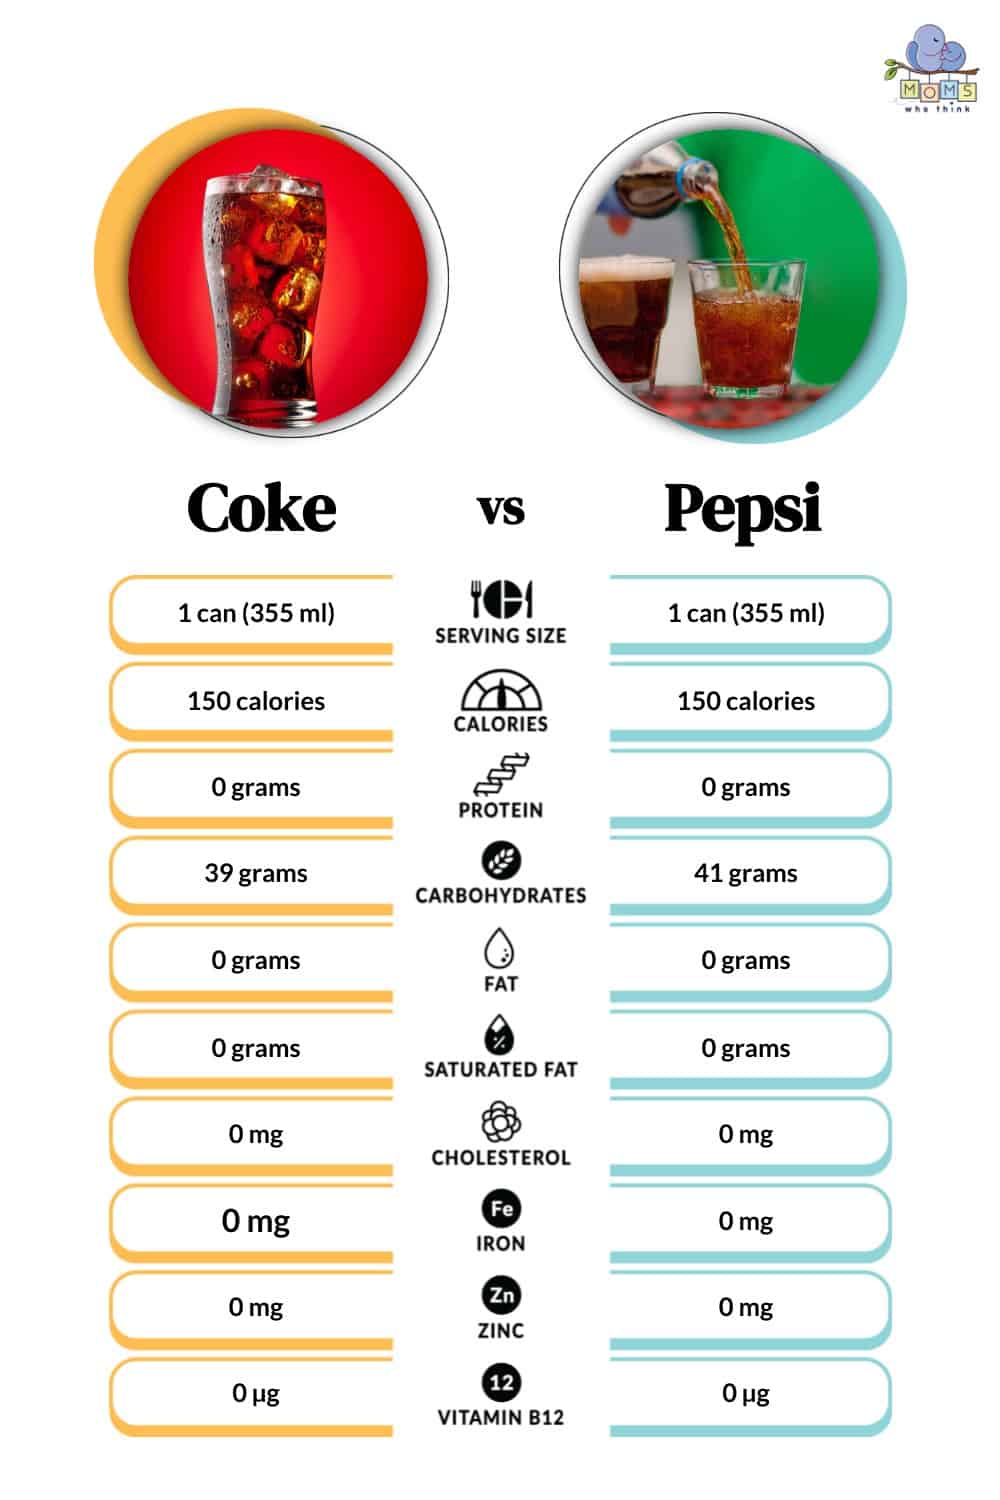 Coke vs Pepsi Nutritional Facts